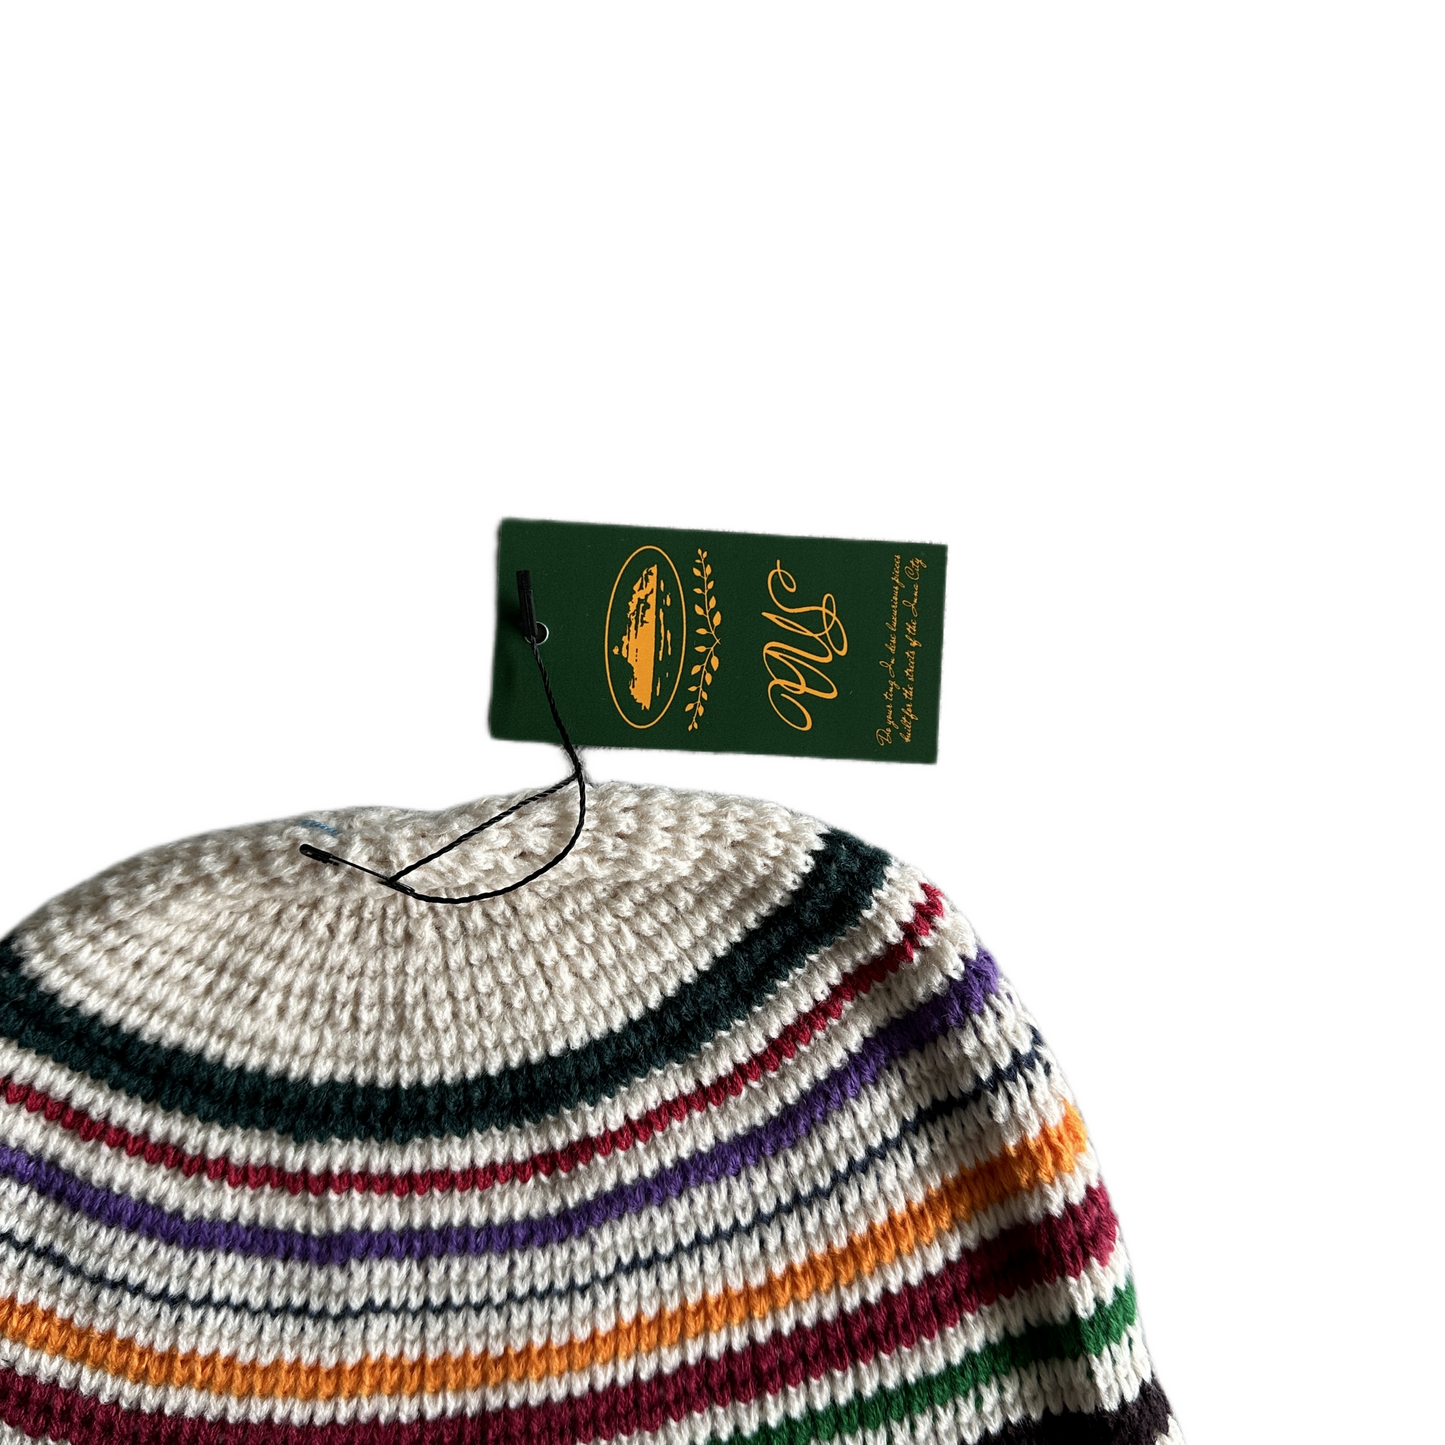 Corteiz Crochet Beanie Knitting Warm Cap Striped Cold Hat - Beige/Multicolor